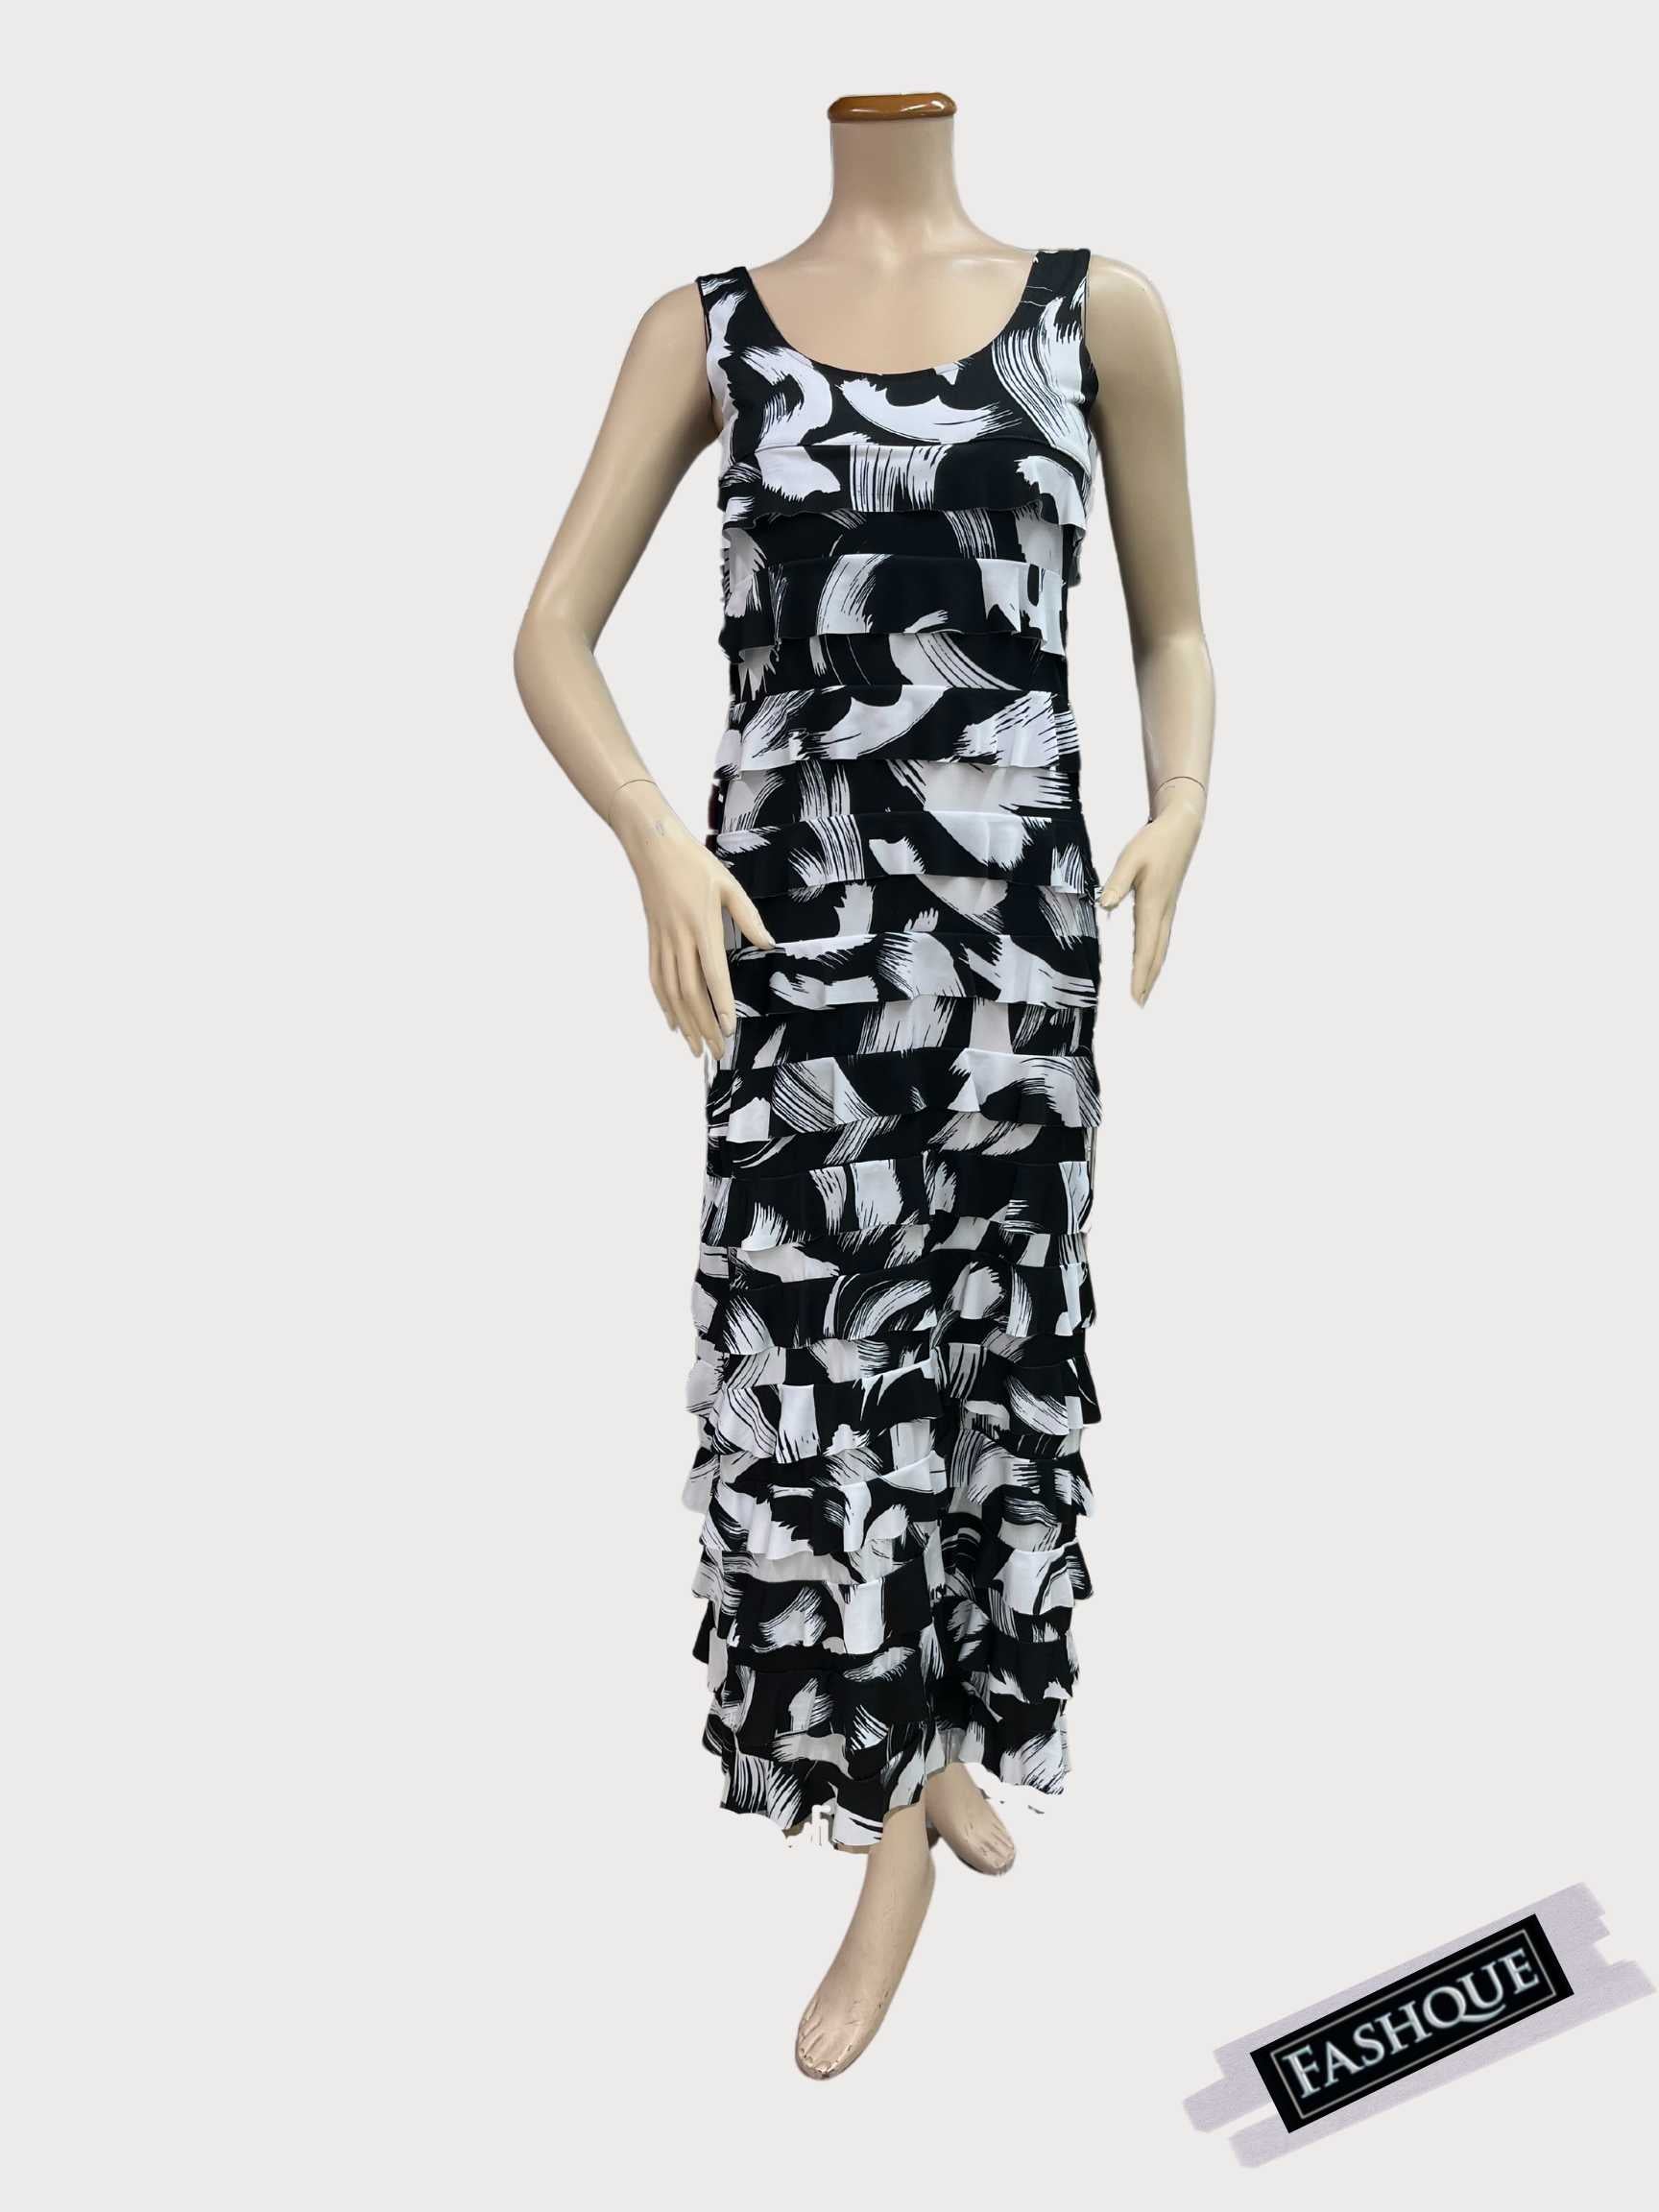 FASHQUE - Ruffle Maxi Dress Sleeveless NEW PRINTED - D2211